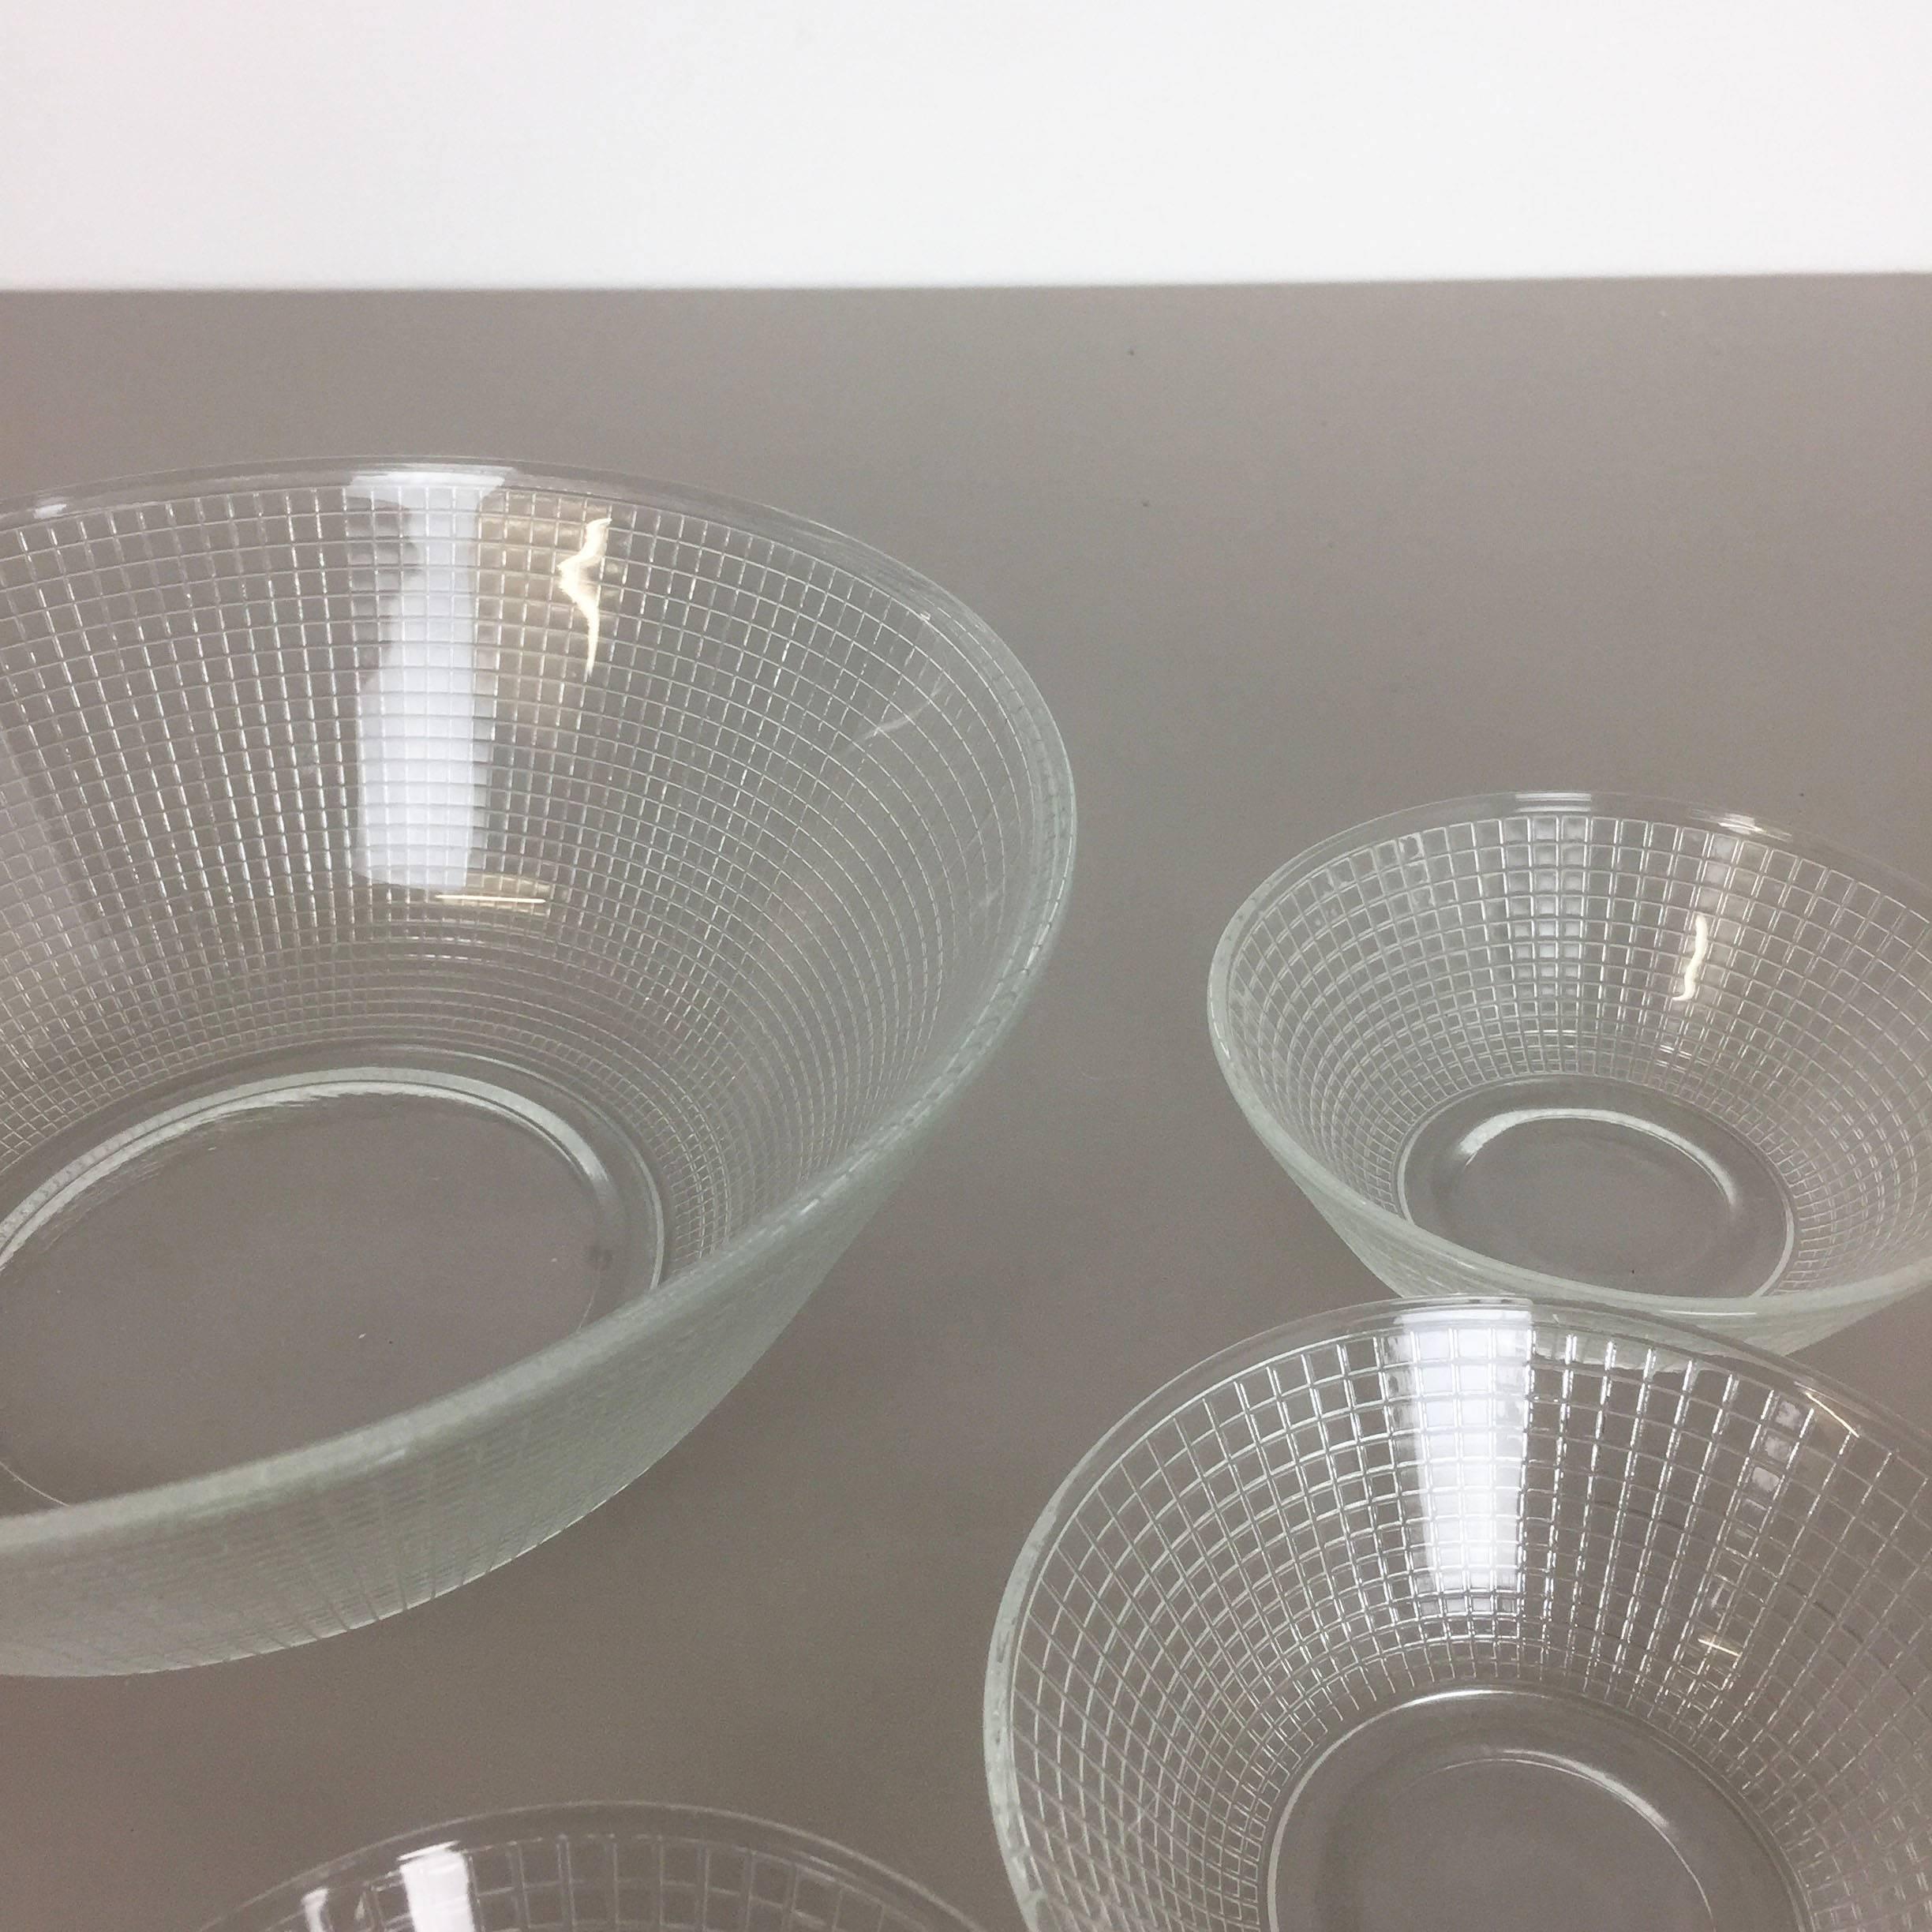 Set of 7 glass shells by Wilhelm Wagenfeld for VLG Weisswasser, Germany 1960s (20. Jahrhundert)